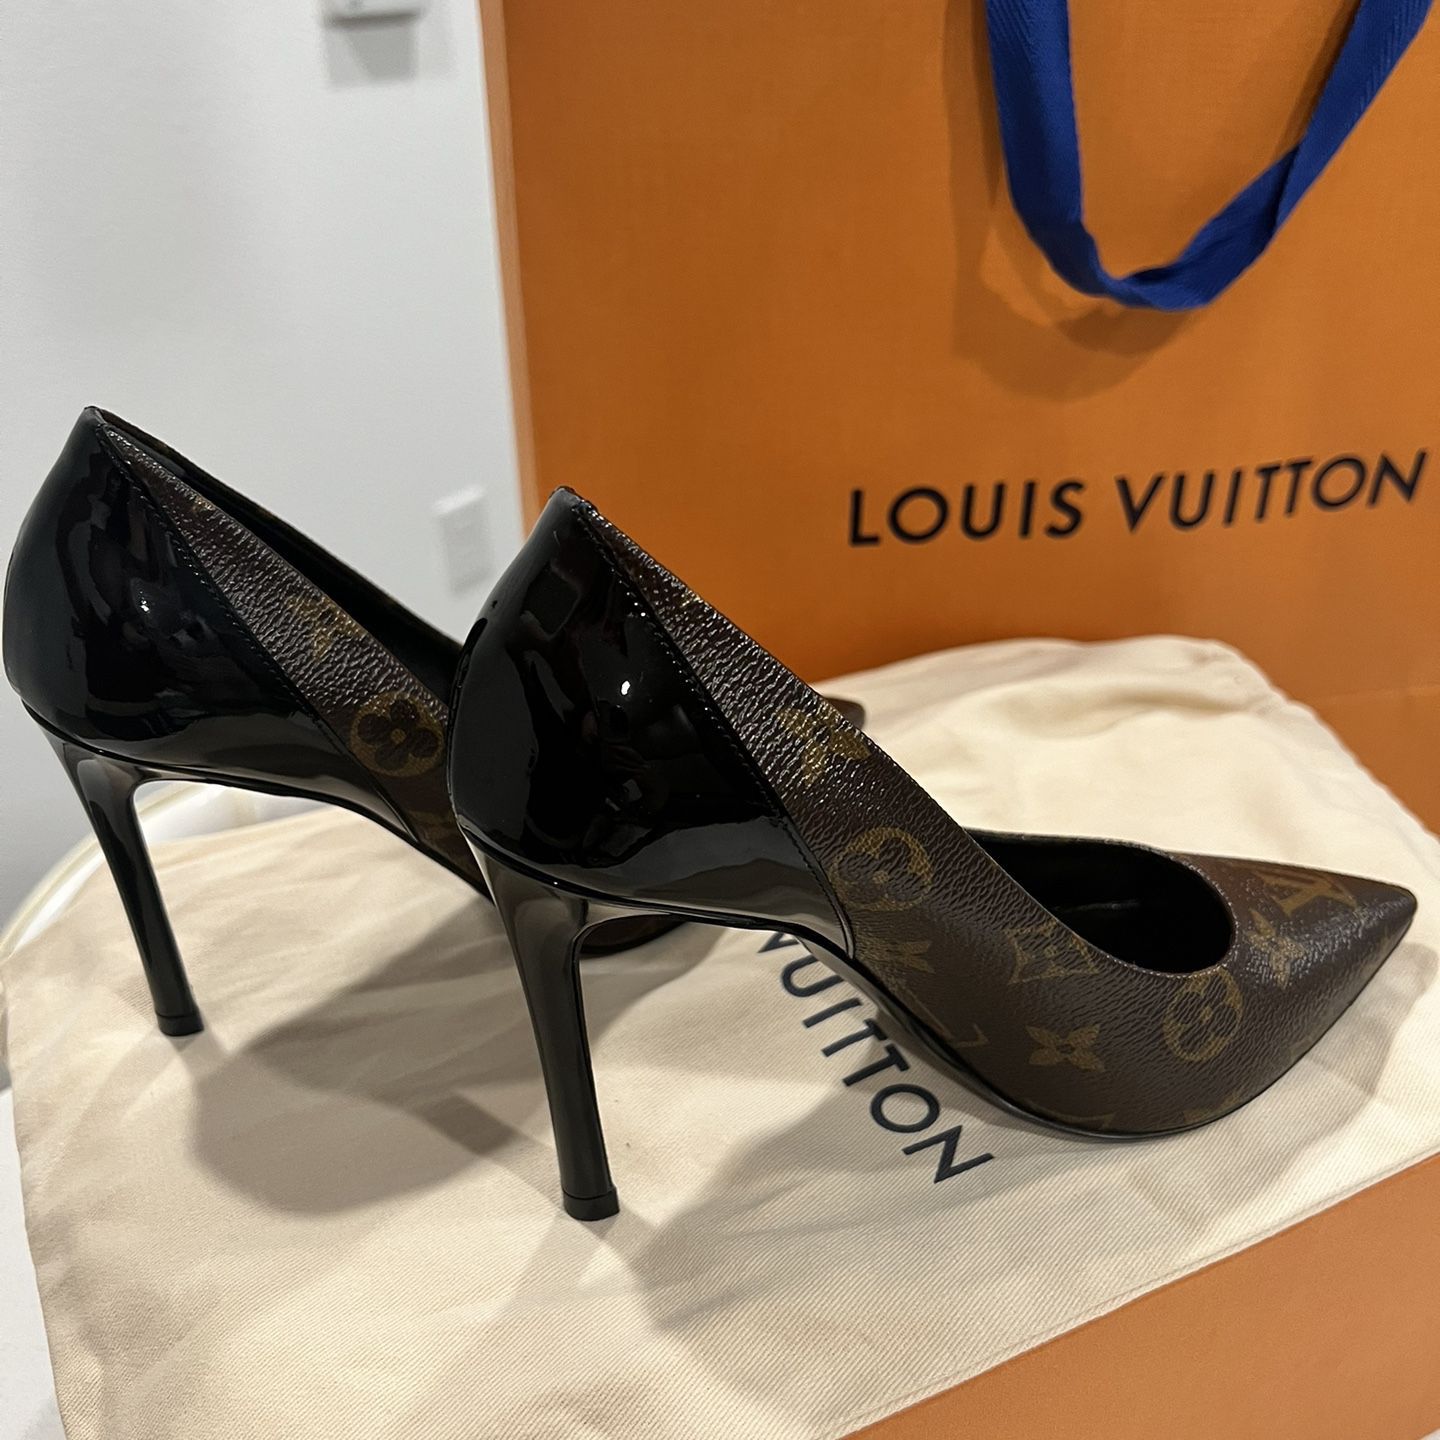 Louis Vuitton supreme size 10 for Sale in San Antonio, TX - OfferUp